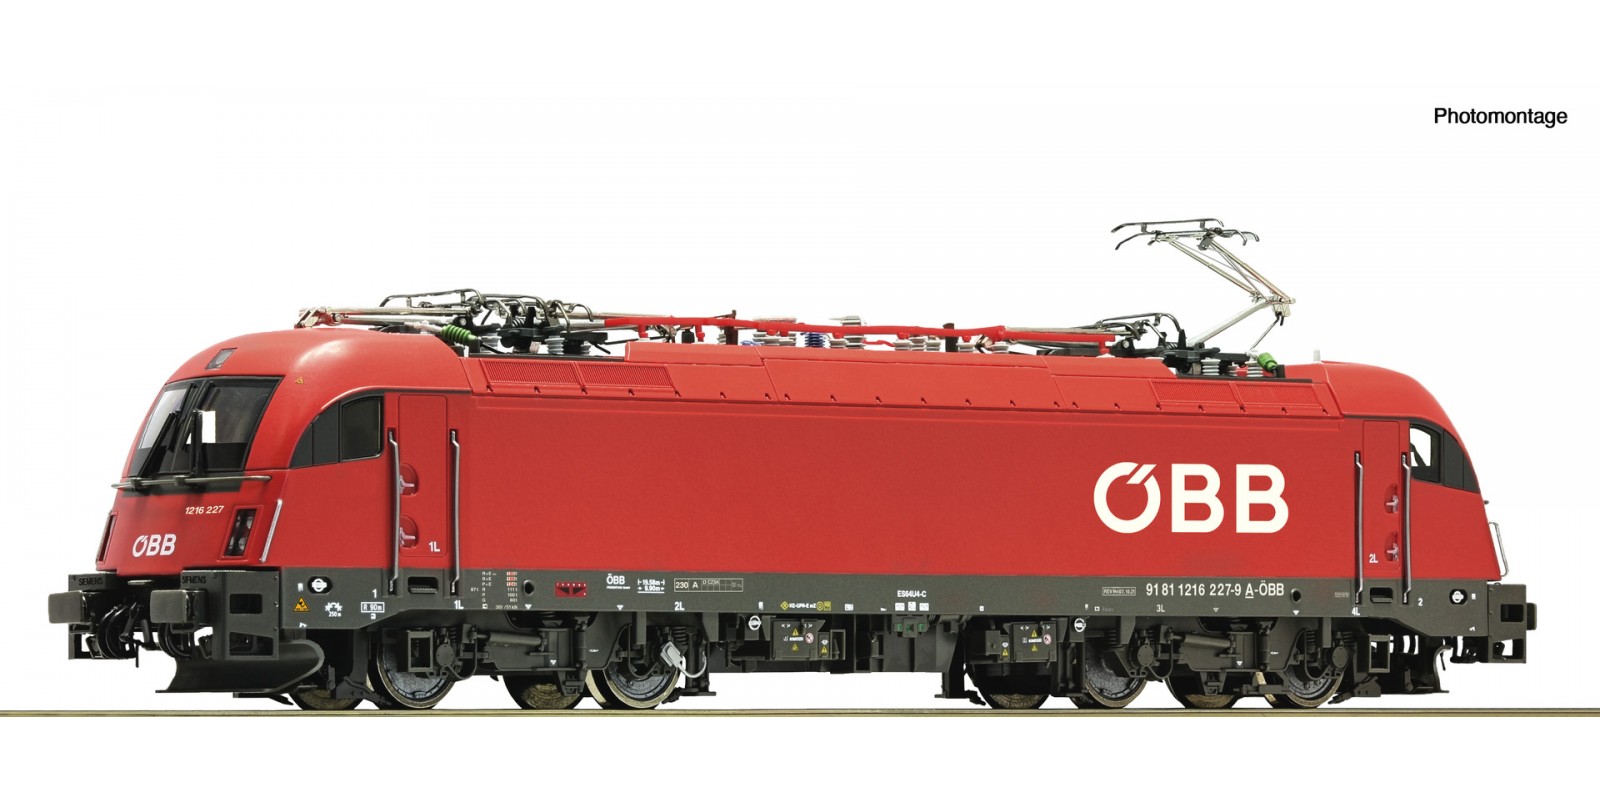 RO7500032 Electric locomotive 1216  227-9 ÖBB                